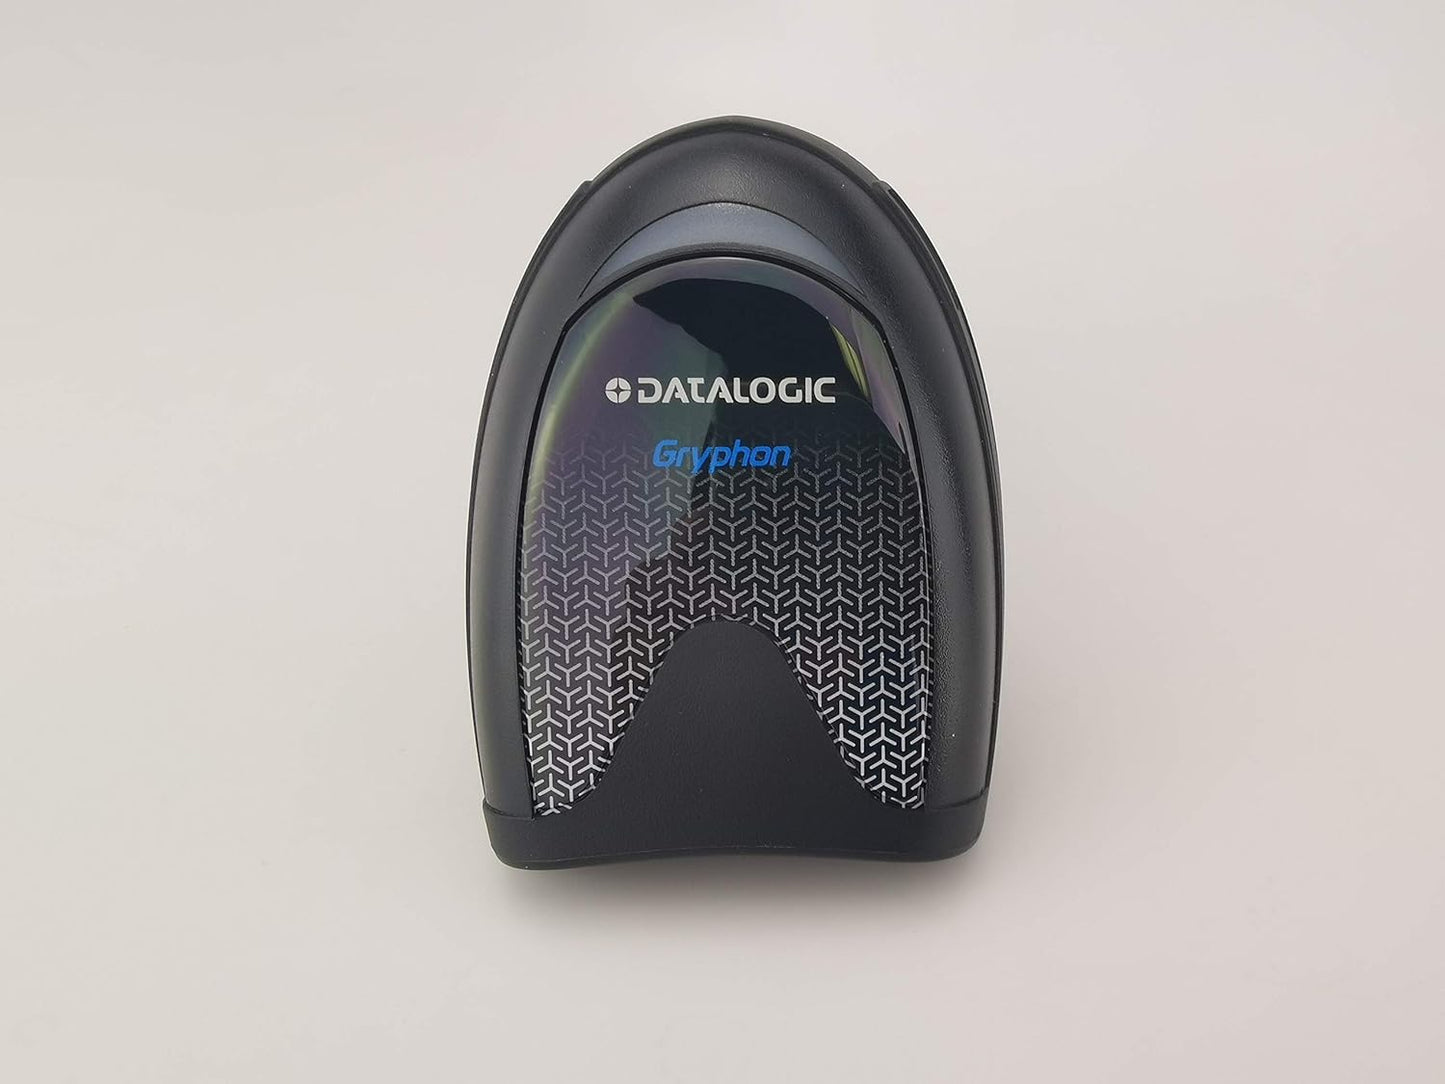 Datalogic Gryphon GD4590 1D/2D Handheld Barcode Scanner w USB Cable